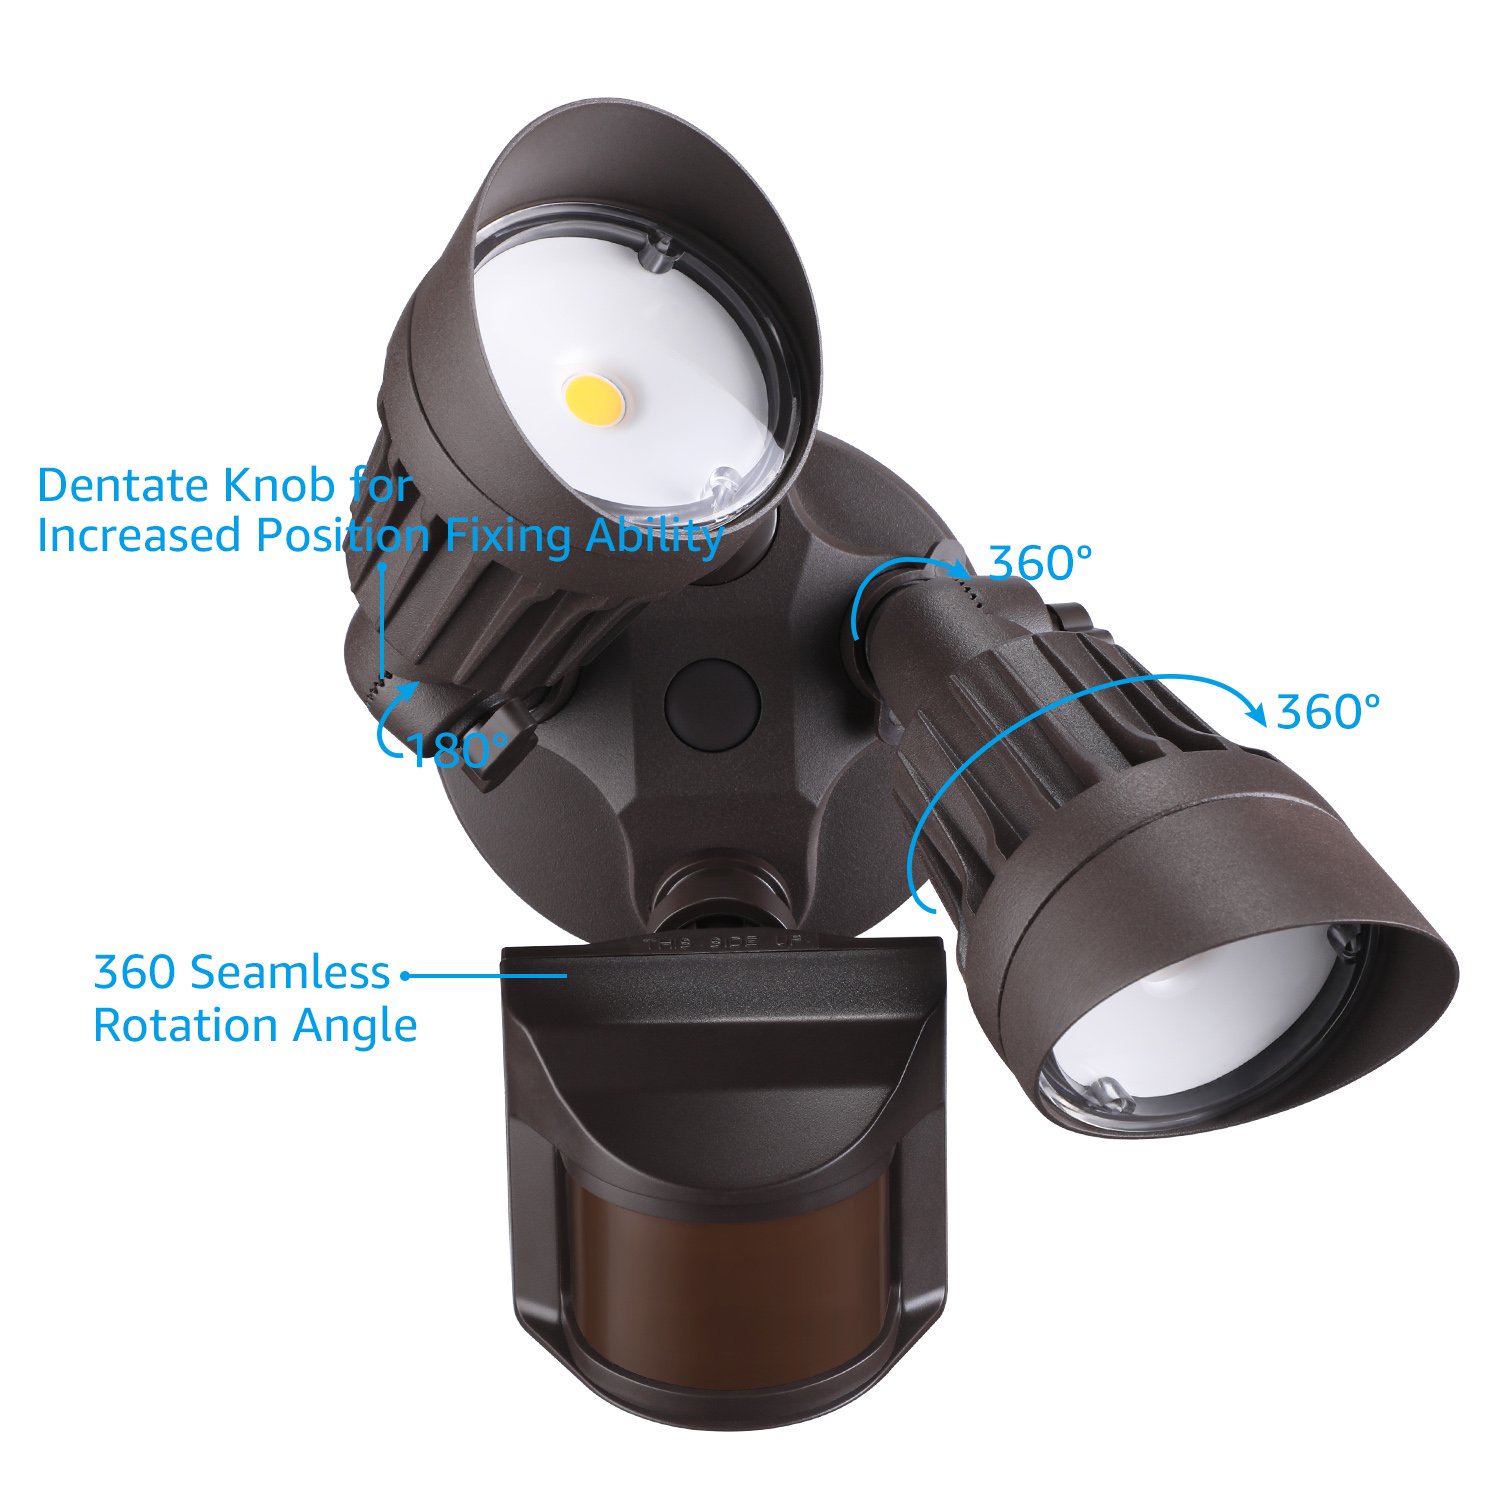 LEONLITE Motion Sensor LED Security Light, Dusk to Dawn Outdoor Flood Lights,  Adjustable 2-Head, IP65 Waterproof, 20W(150W Equiv.), 5000K Daylight 